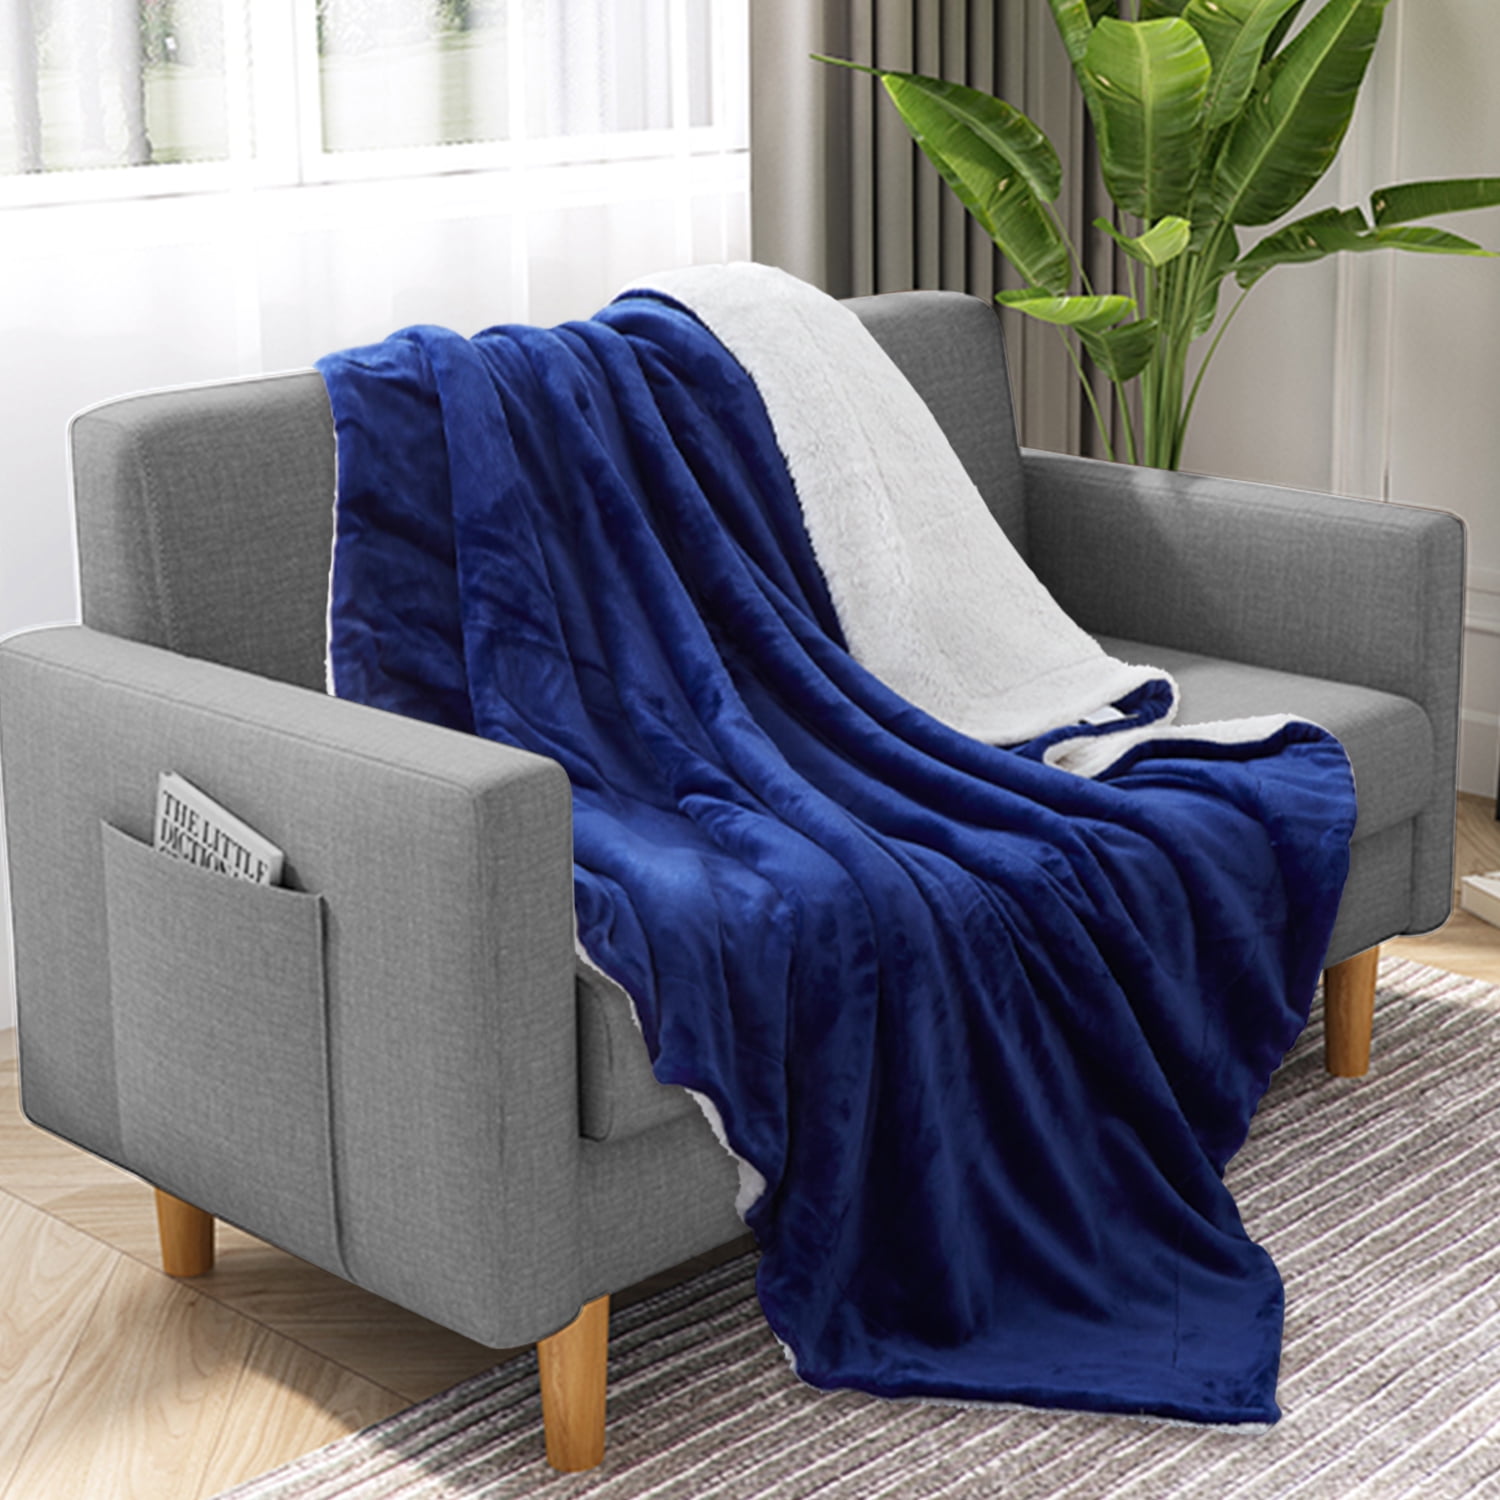 JML Sherpa Fleece Throw Blanket,Soft Warm Plush Blanket for Bed